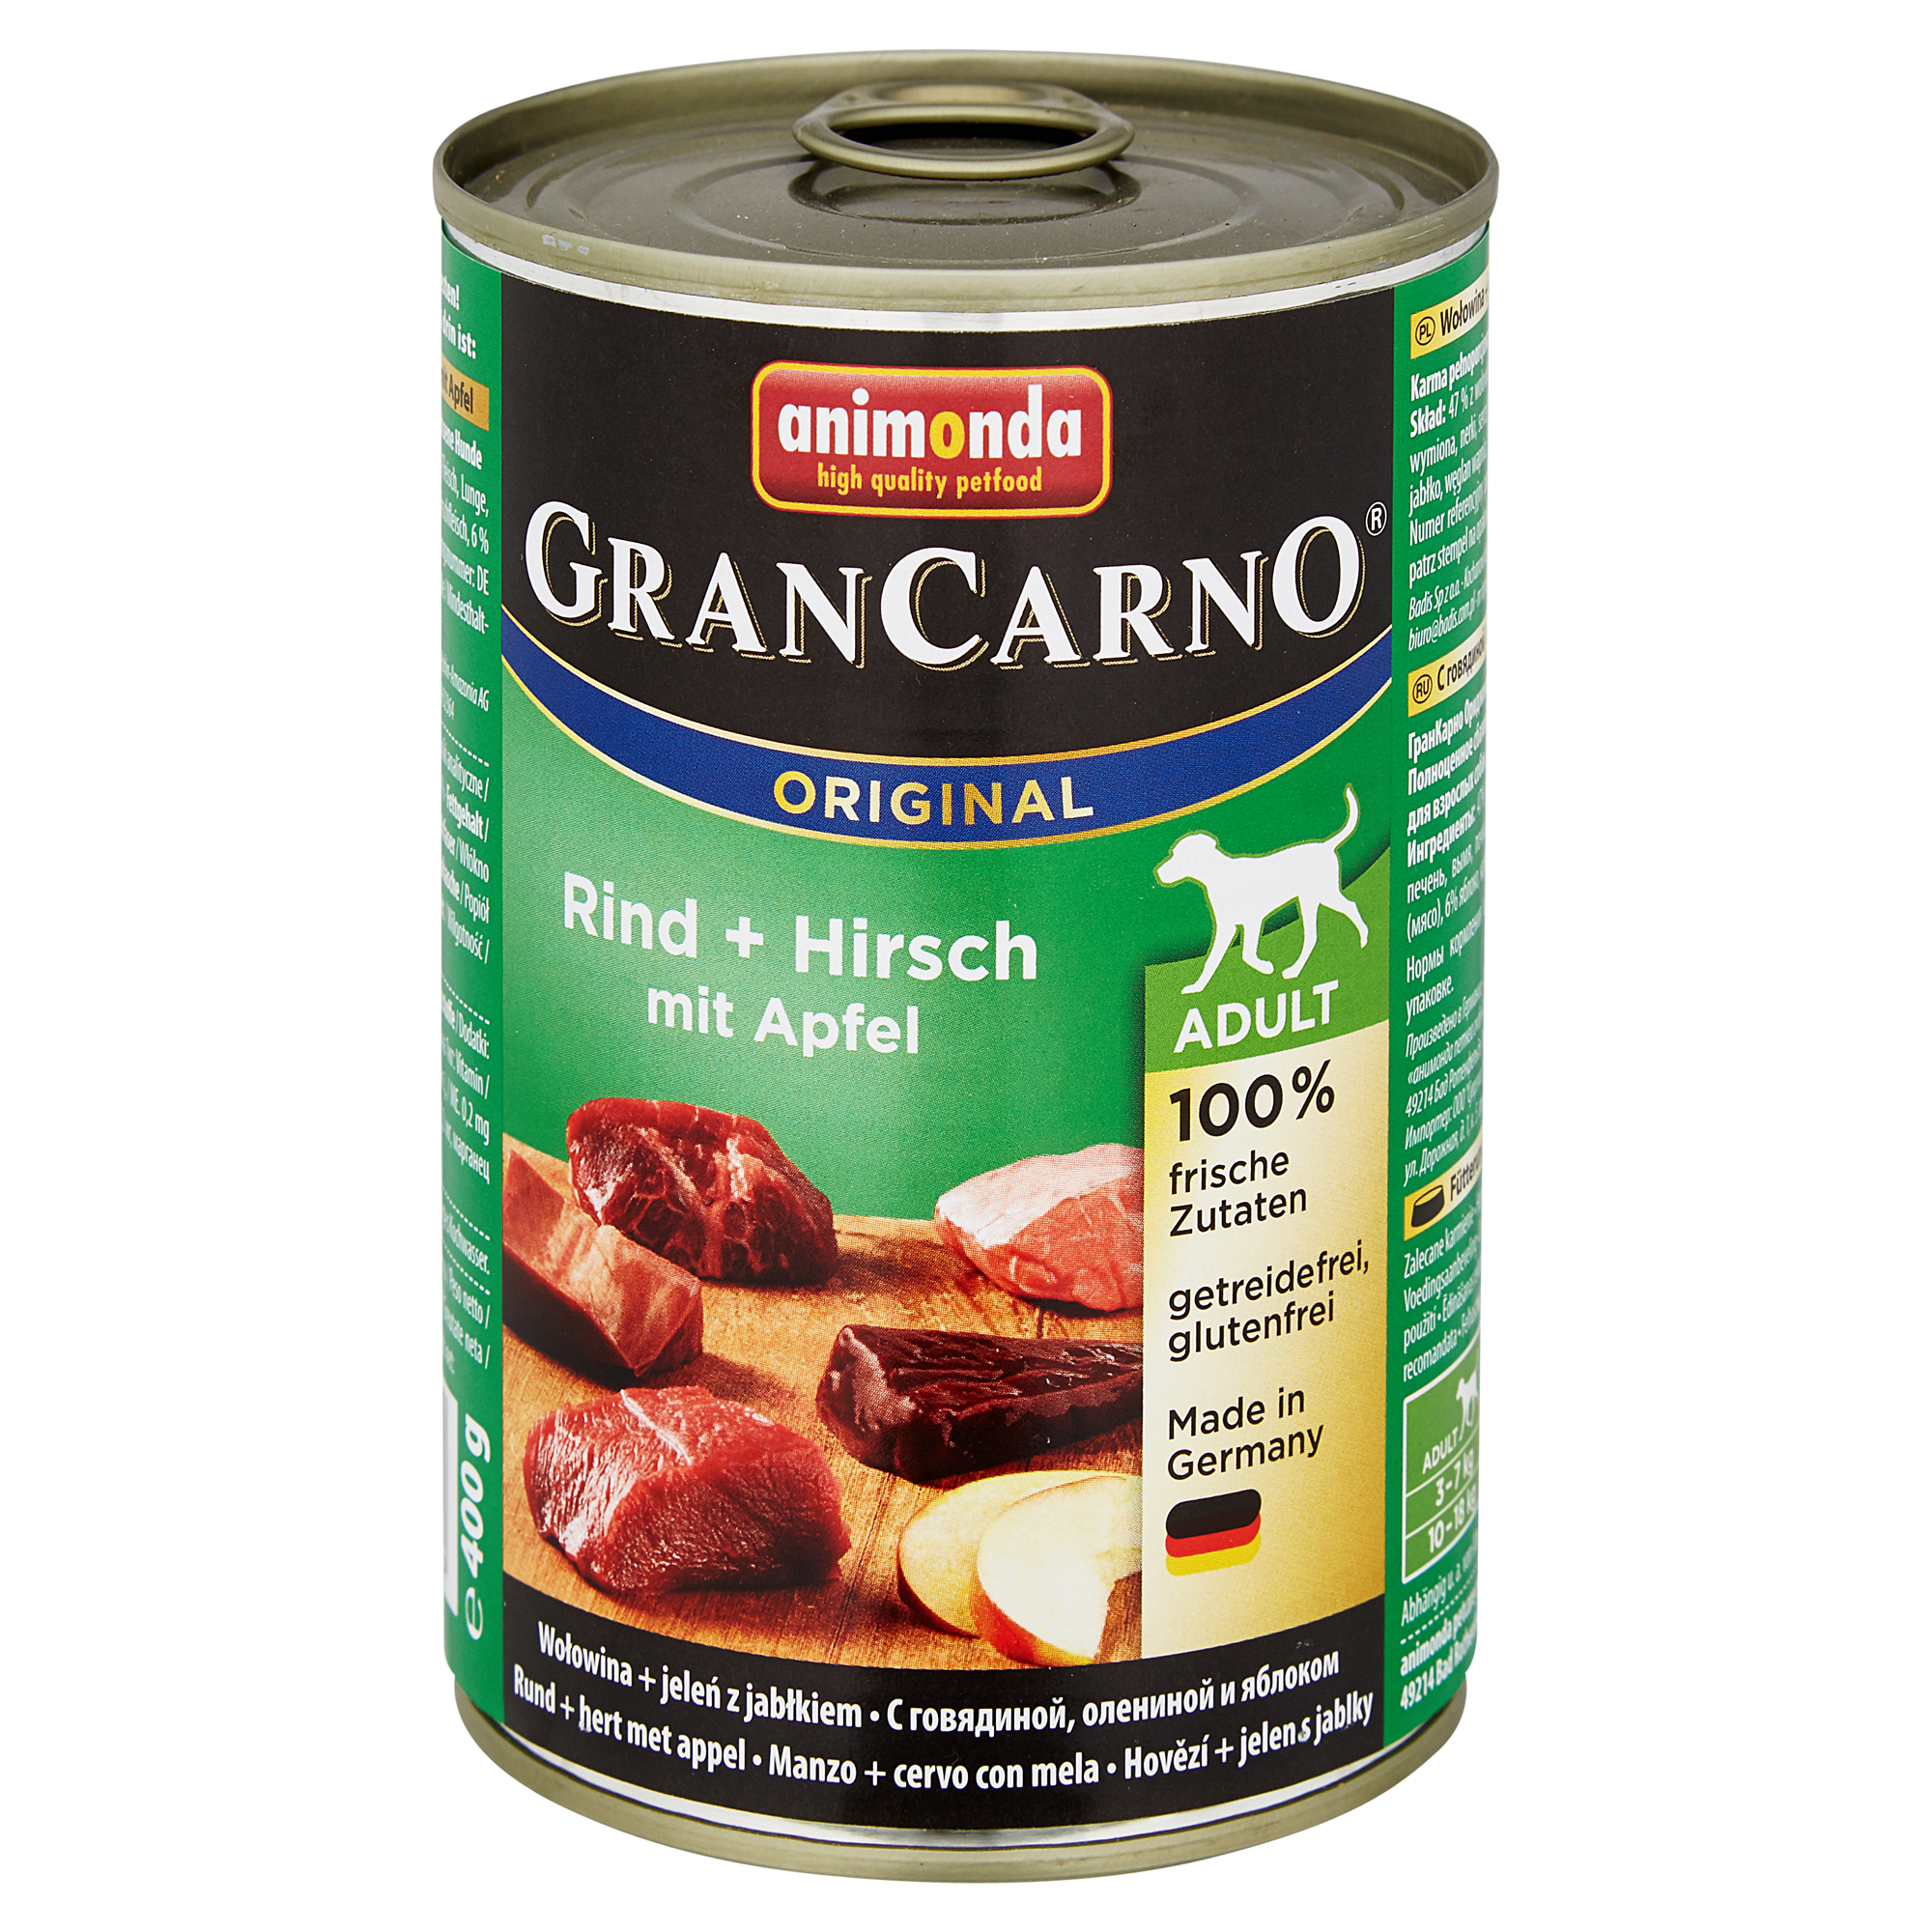 Hundenassfutter "Gran Carno" Original Rind/Hirsch/Apfel 400 g + product picture